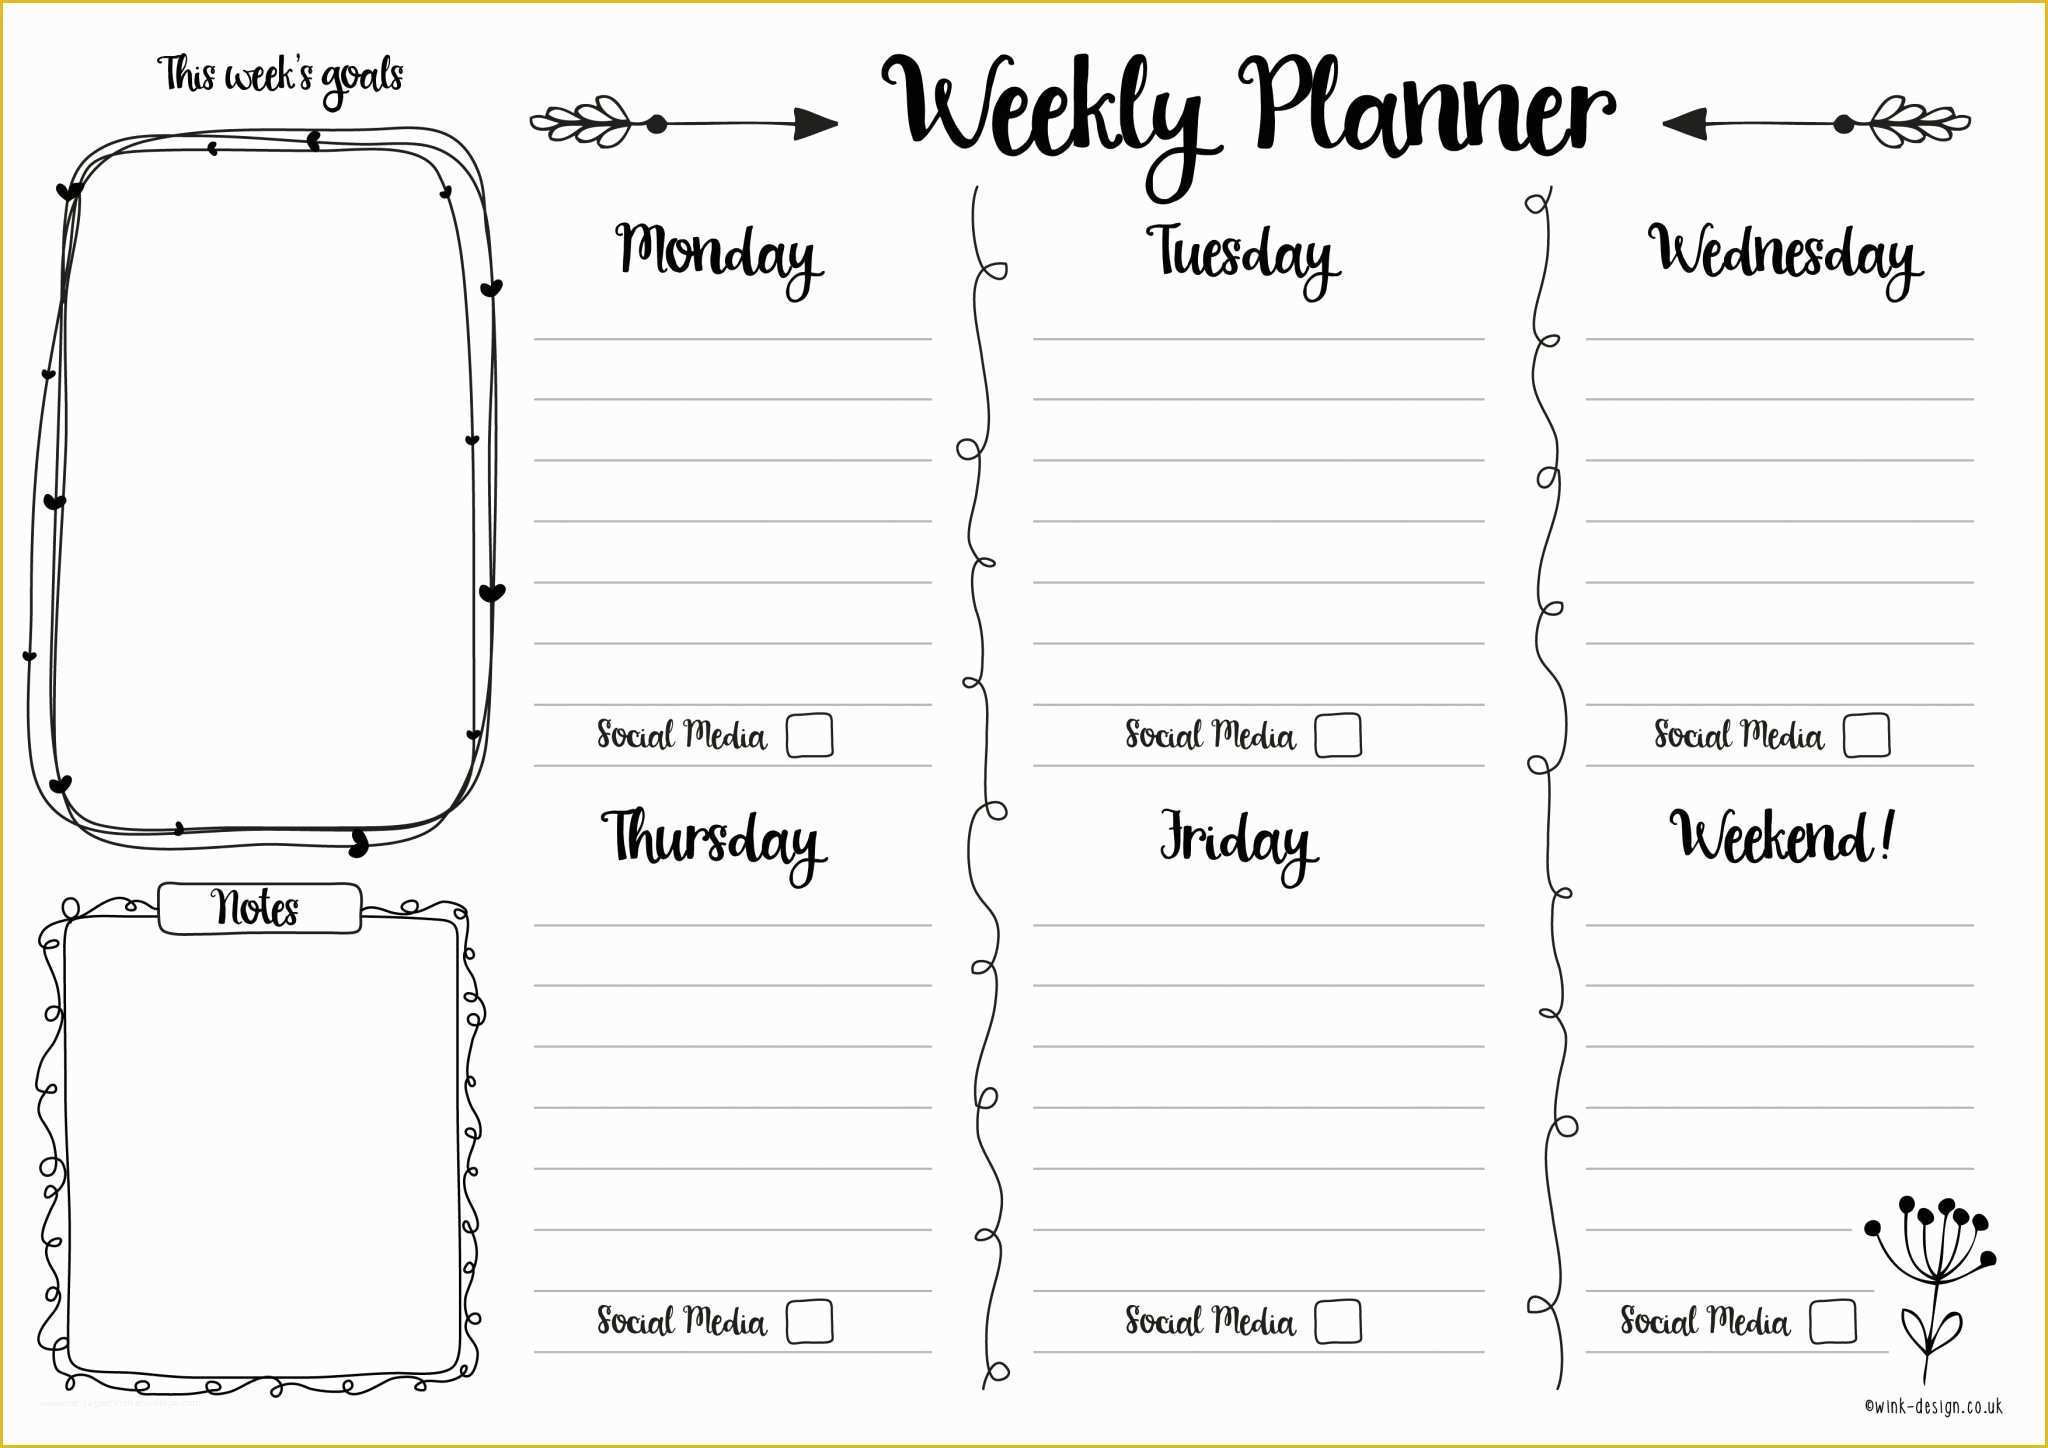 Free Weekly Planner Template Of May 2018 Weekly Calendar Planner Templates